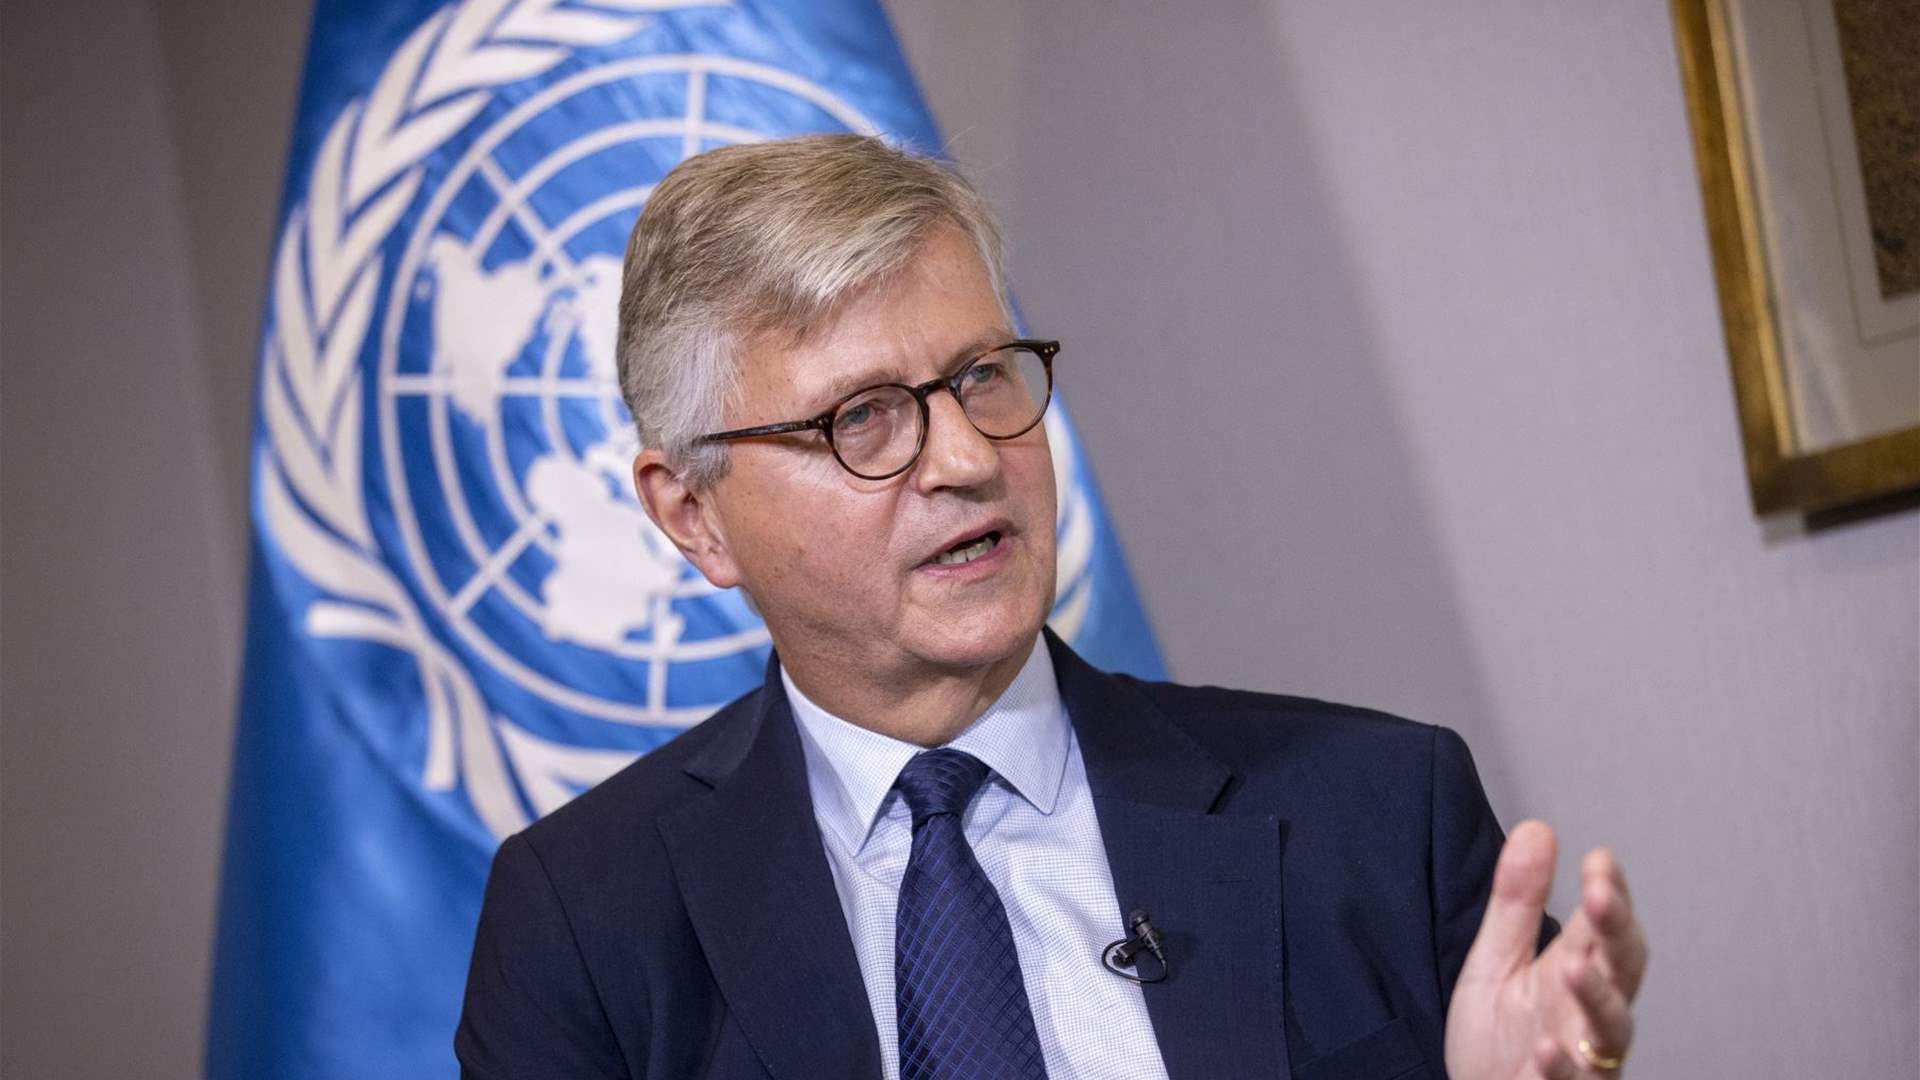 Senior UN official visits Mali to establish &quot;new rules of cooperation&quot;